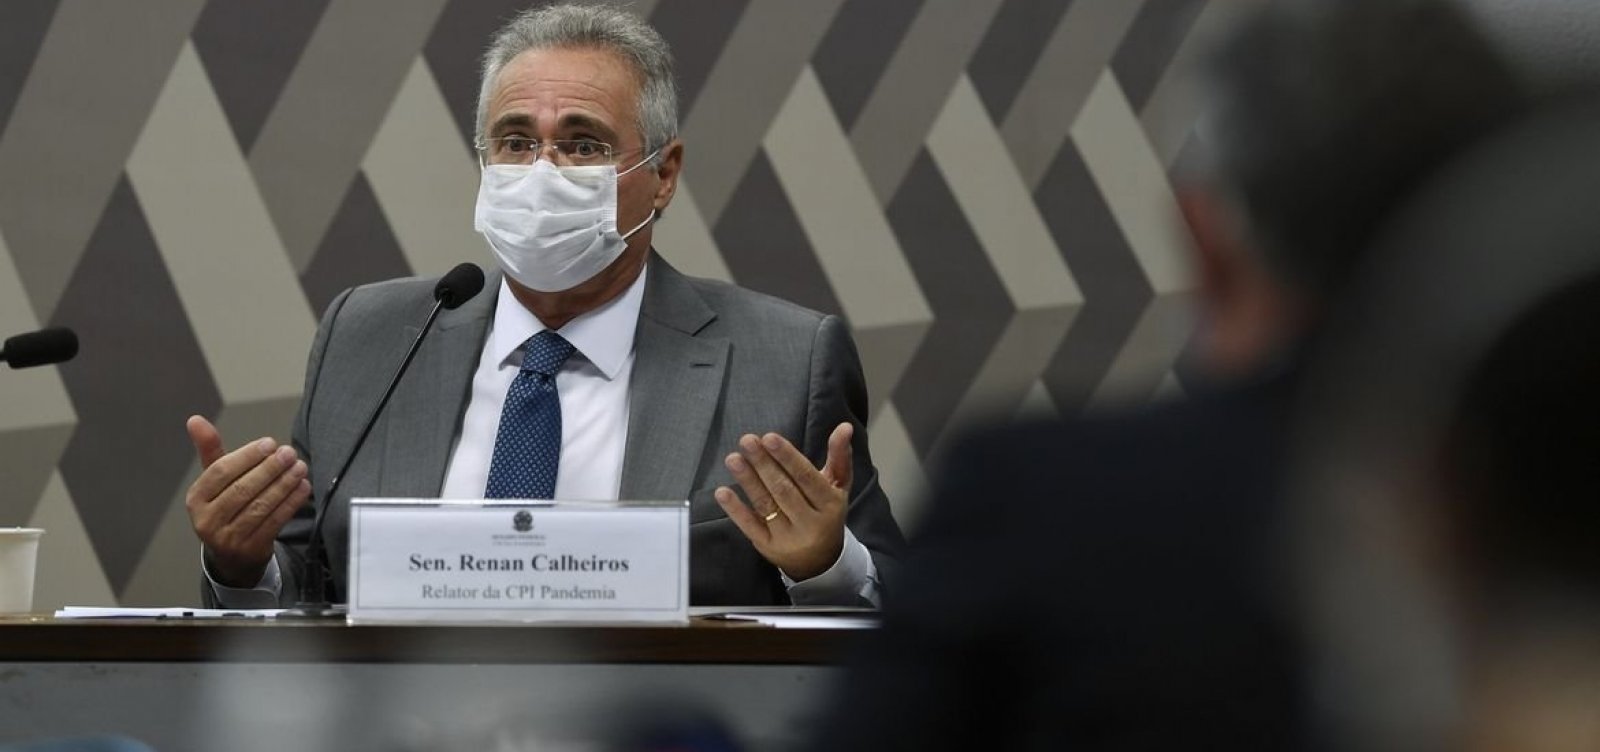 CPI ignora suposto conflito de interesses entre Renan Calheiros e empresa investigada